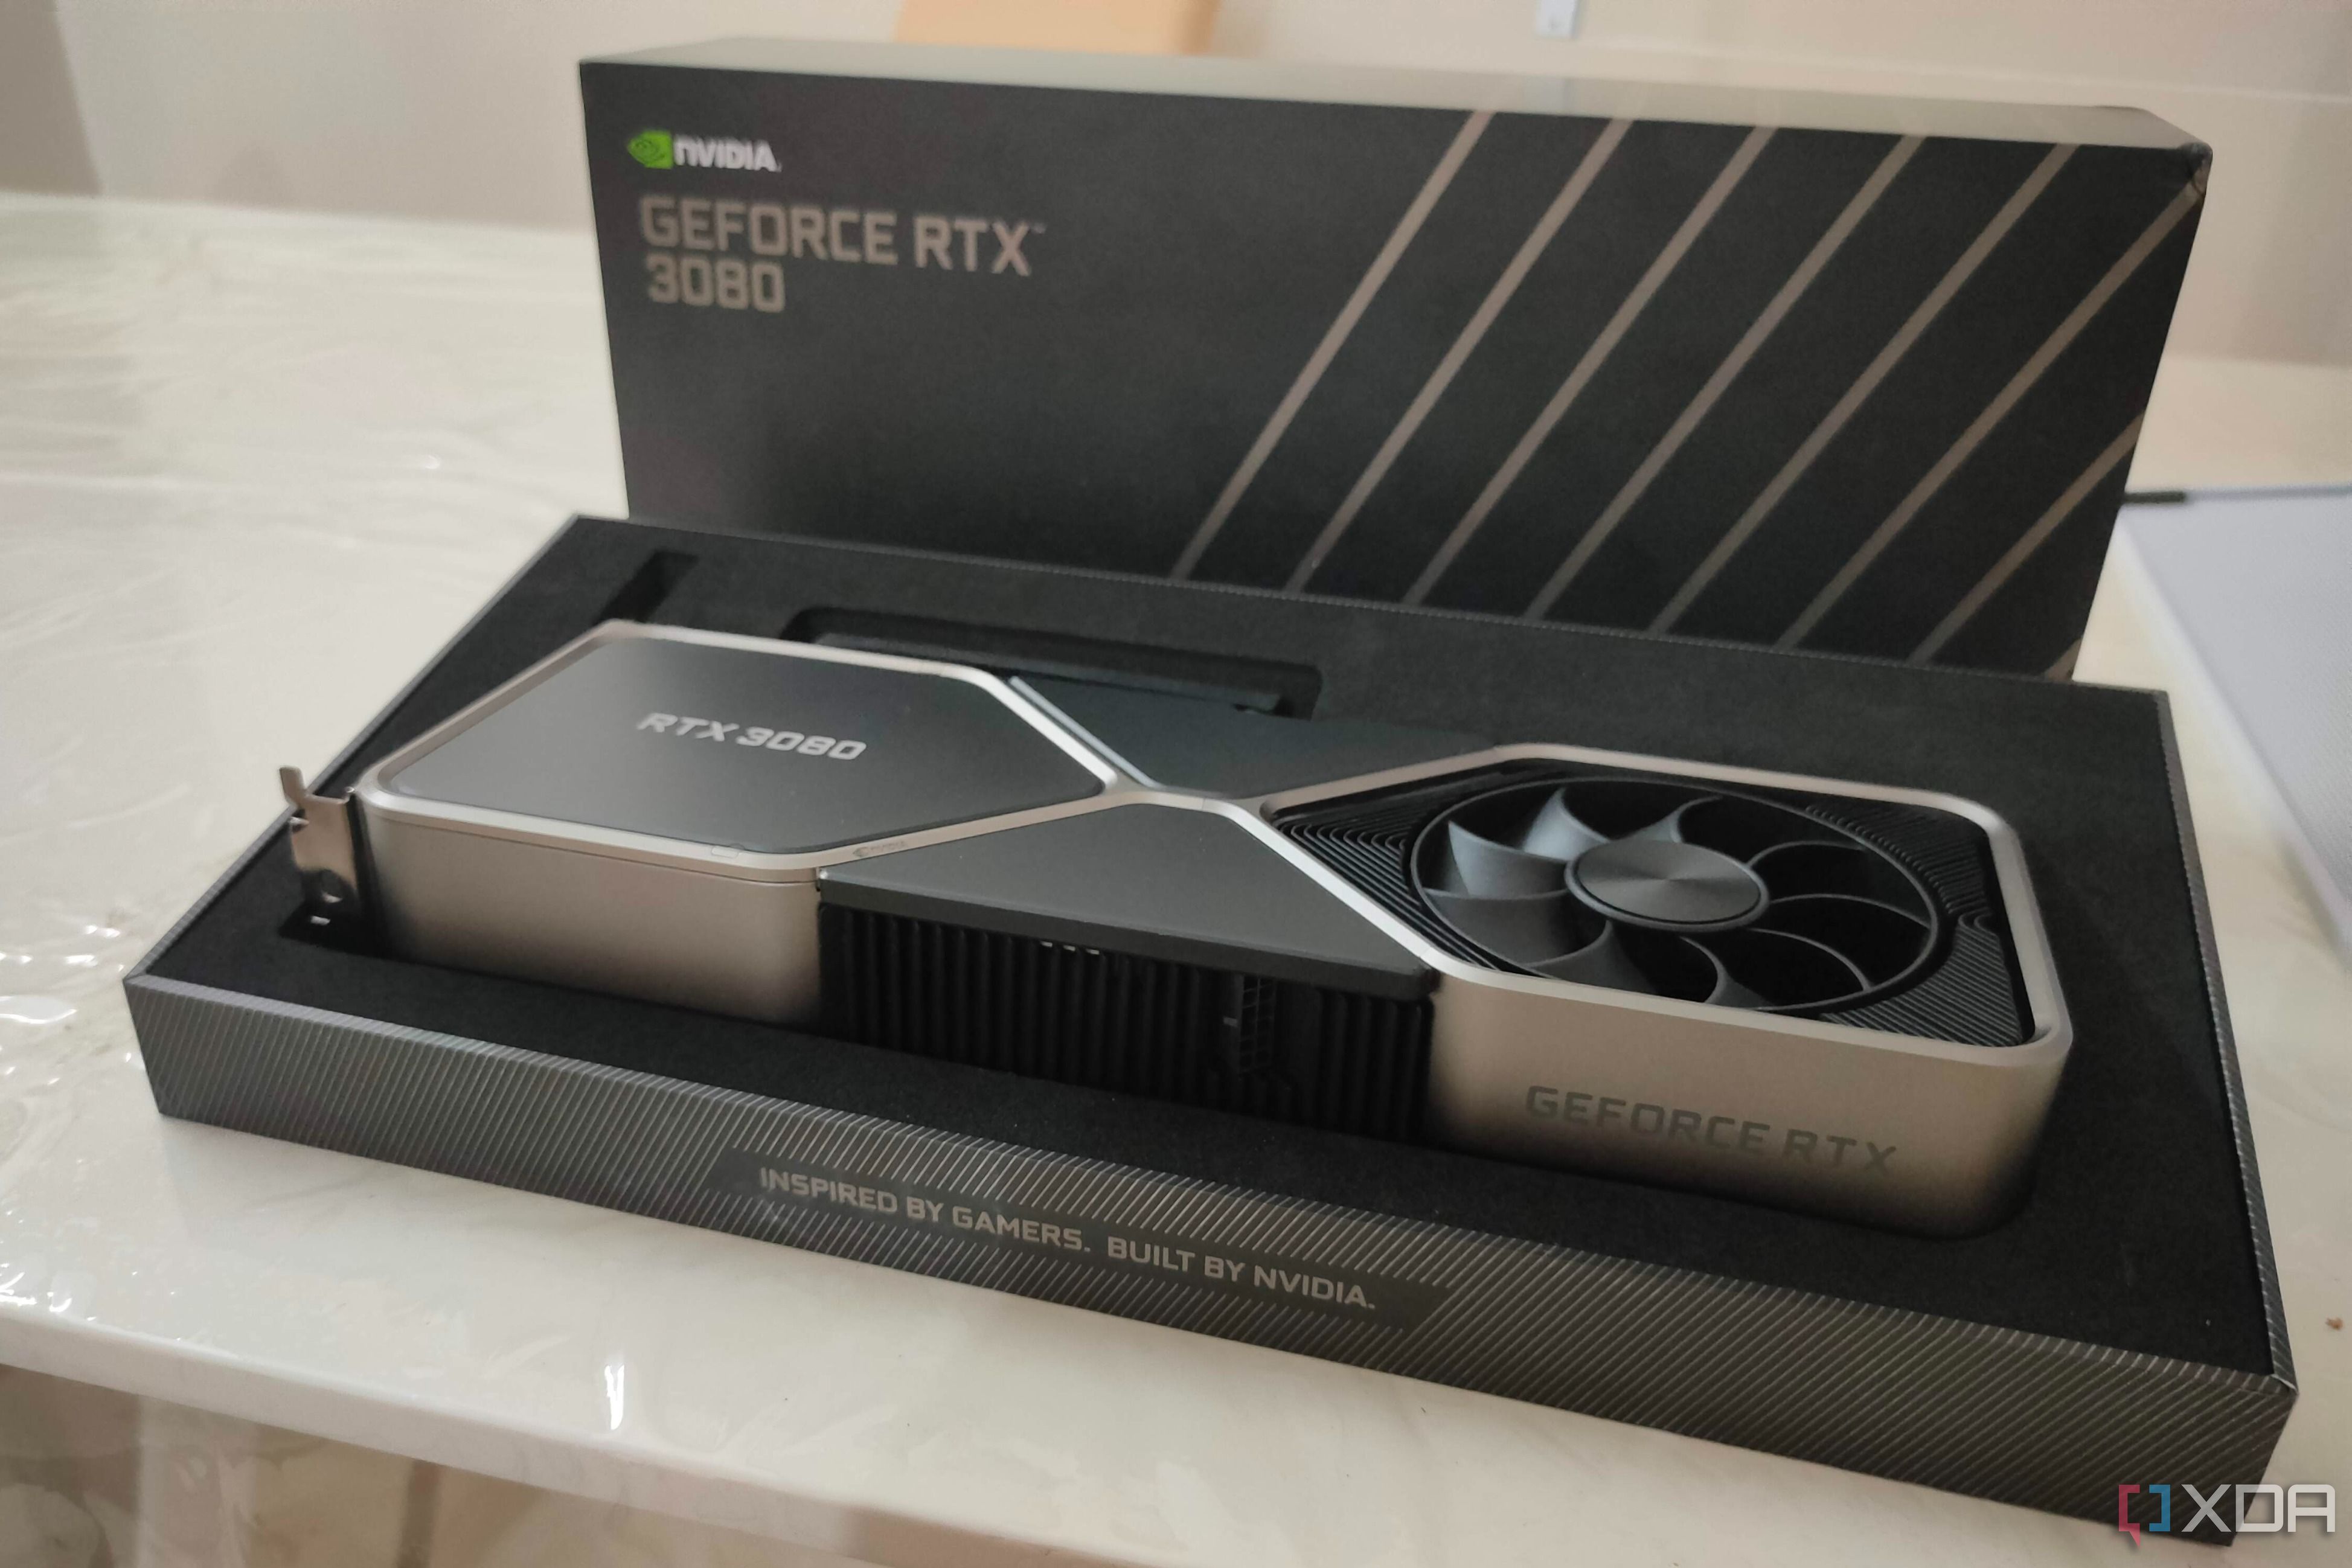 Desembalagem da Nvidia GeForce RTX 3080 Founder's Edition